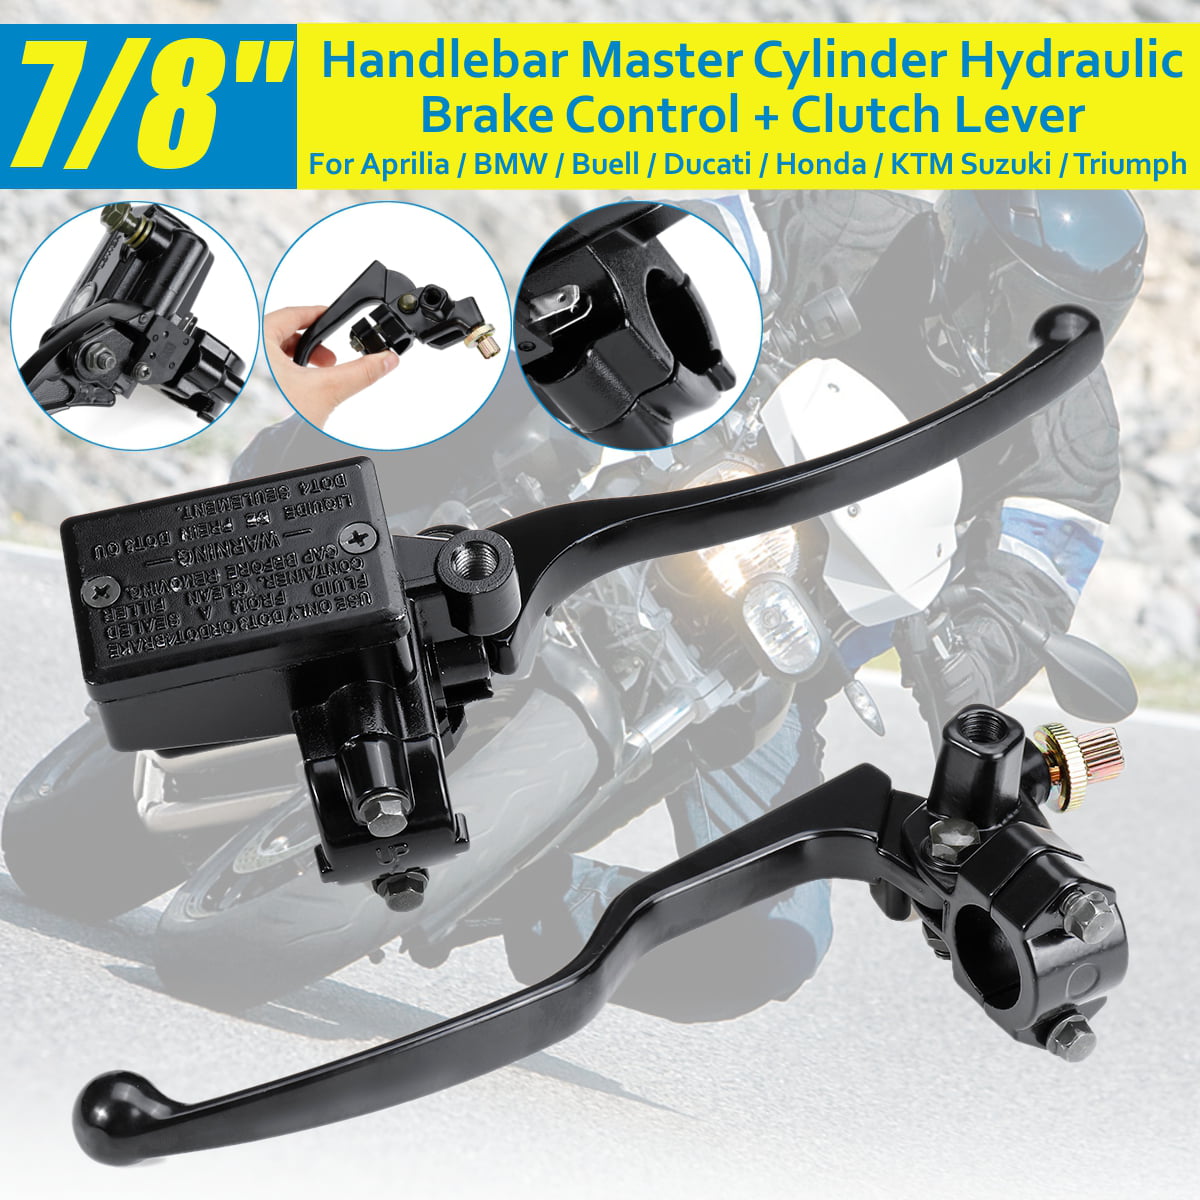 7/8" Motorcycle Handlebar Master Cylinder Hydraulic Brake Control & Clutch Lever